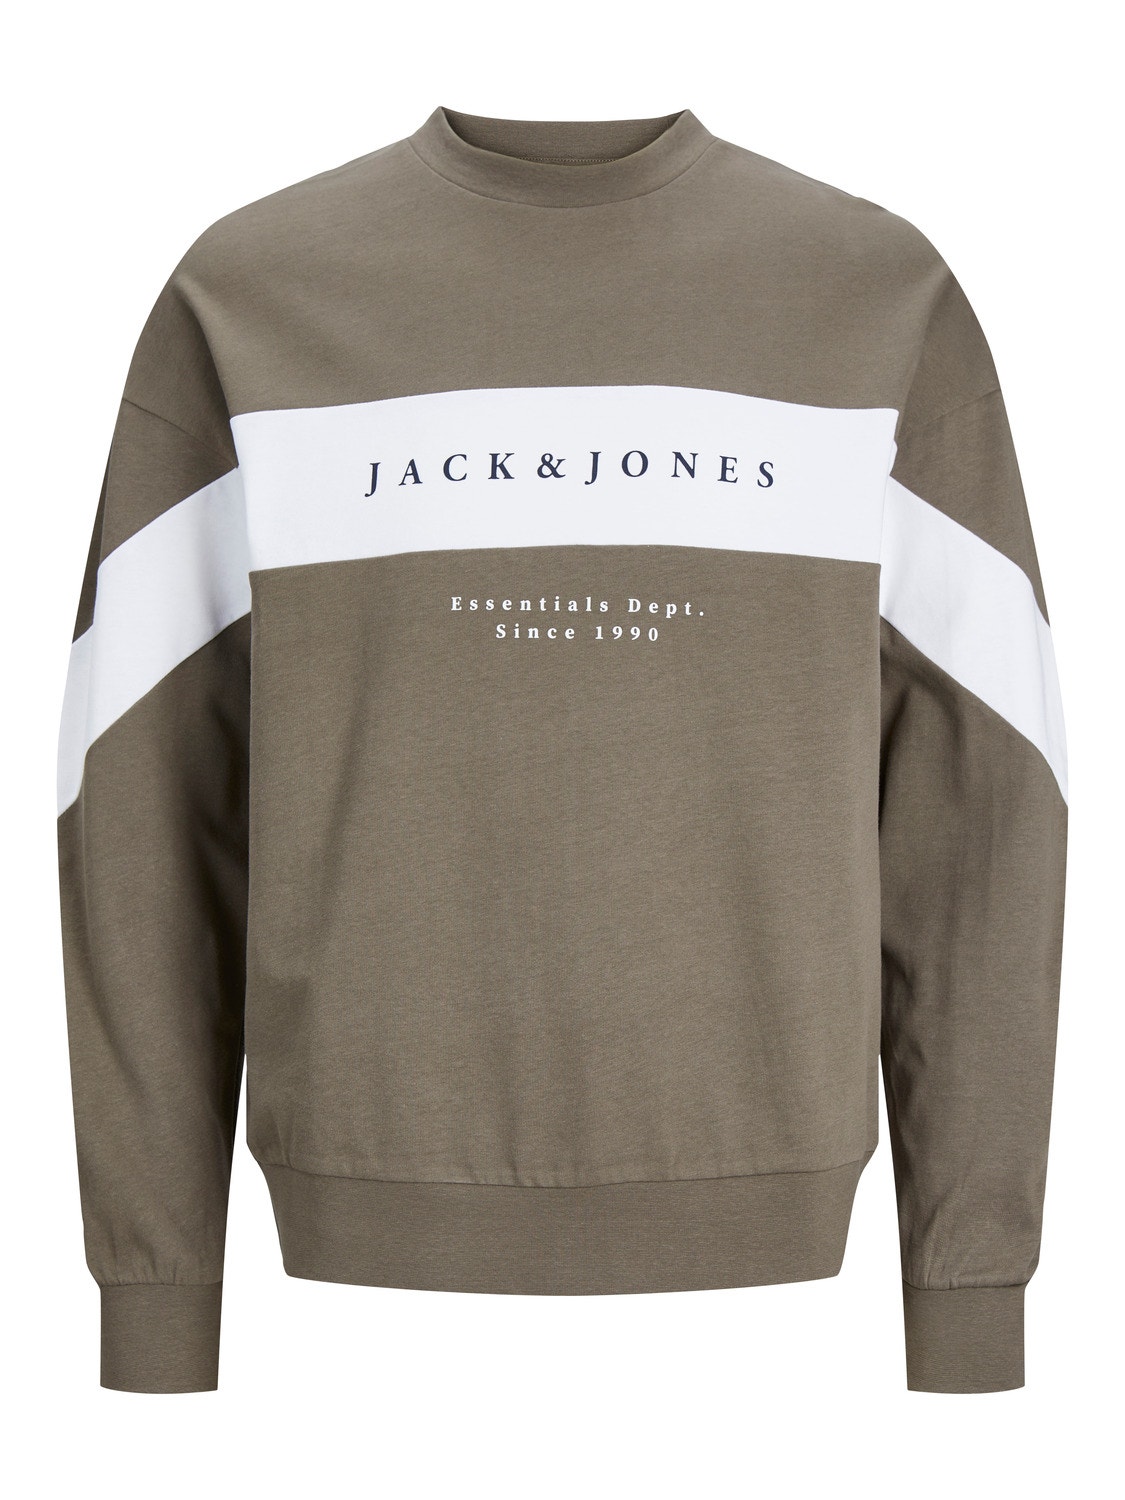 Jack & Jones Logo Crewn Neck Sweatshirt -Bungee Cord - 12249979